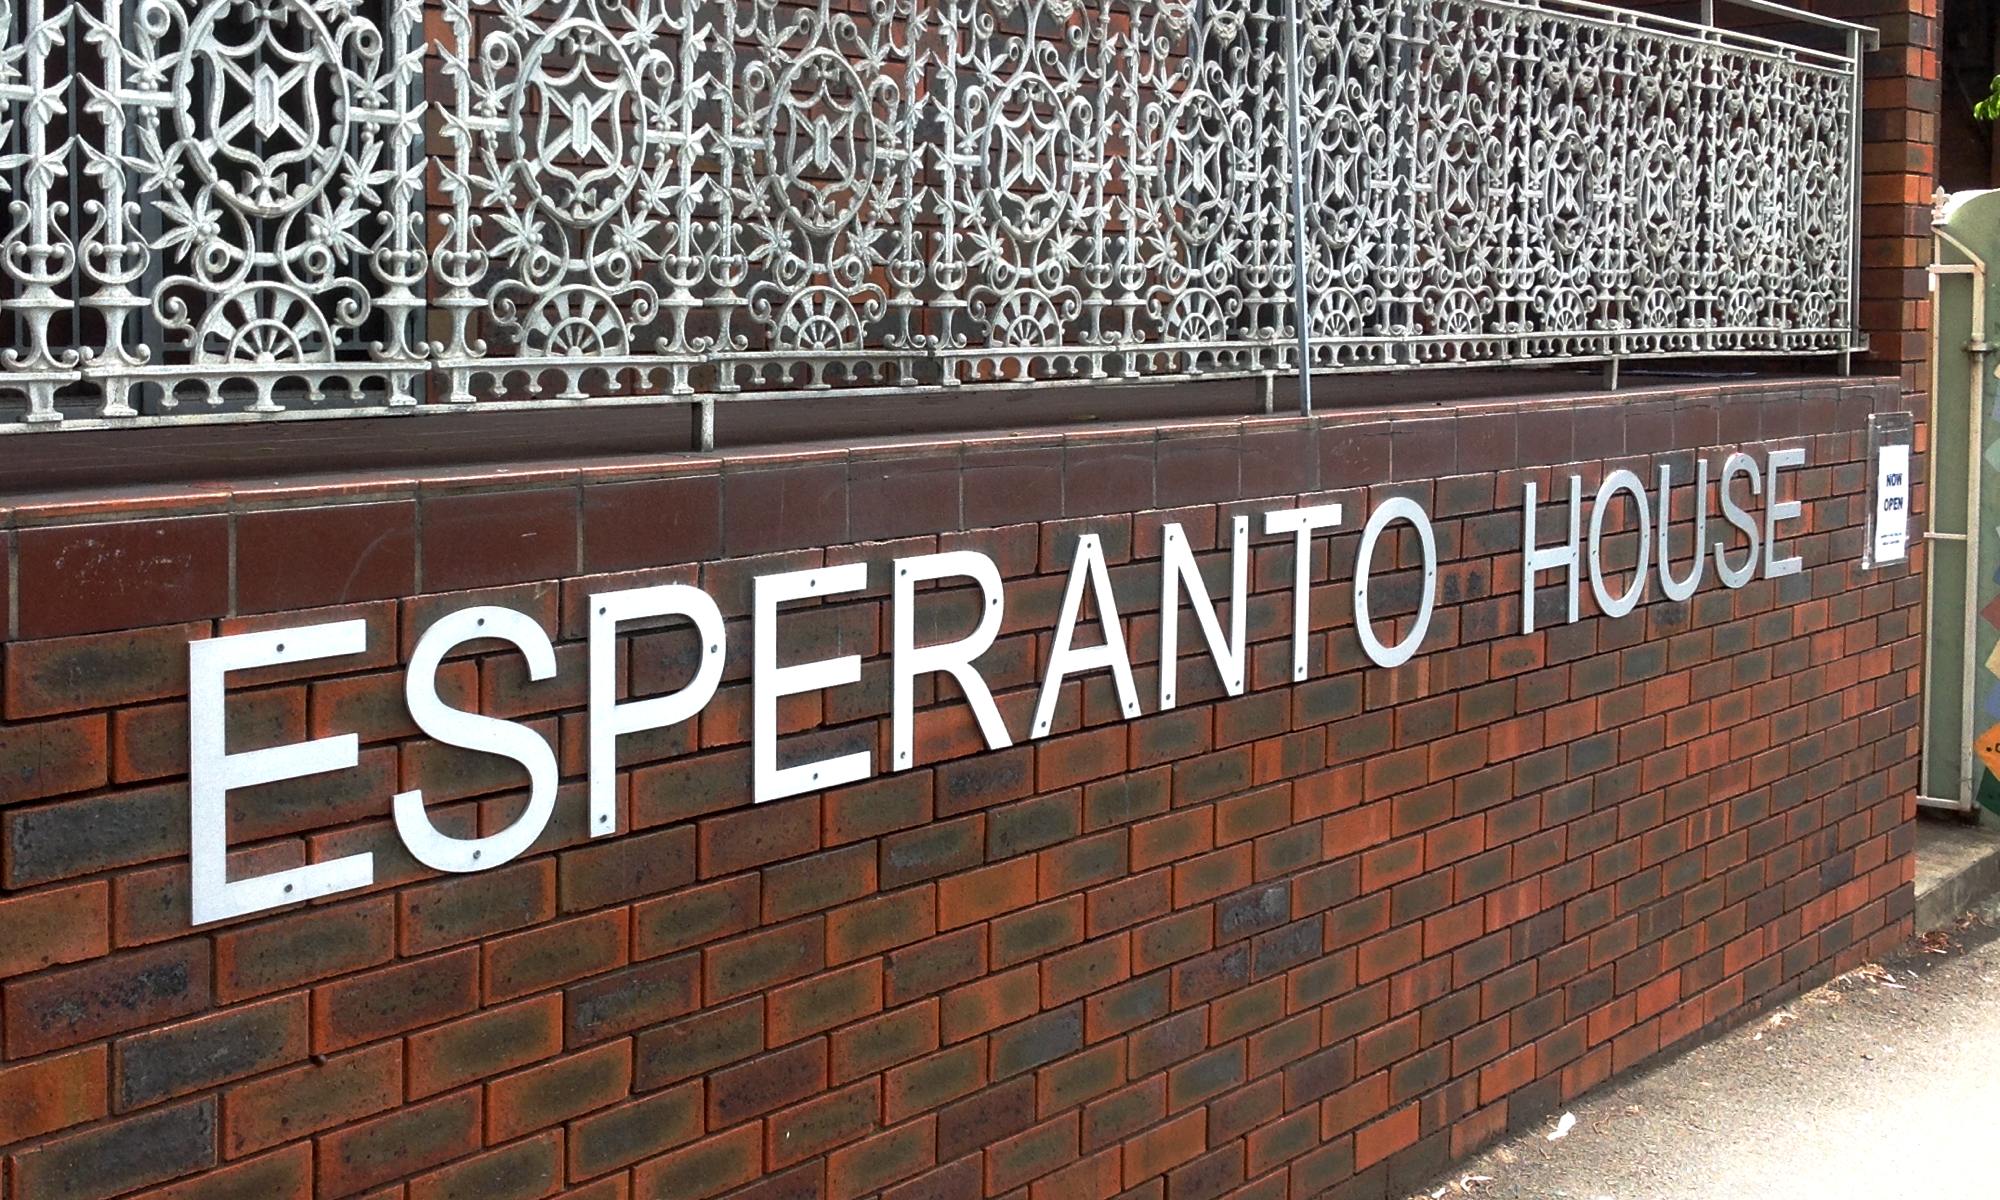 Esperanto House